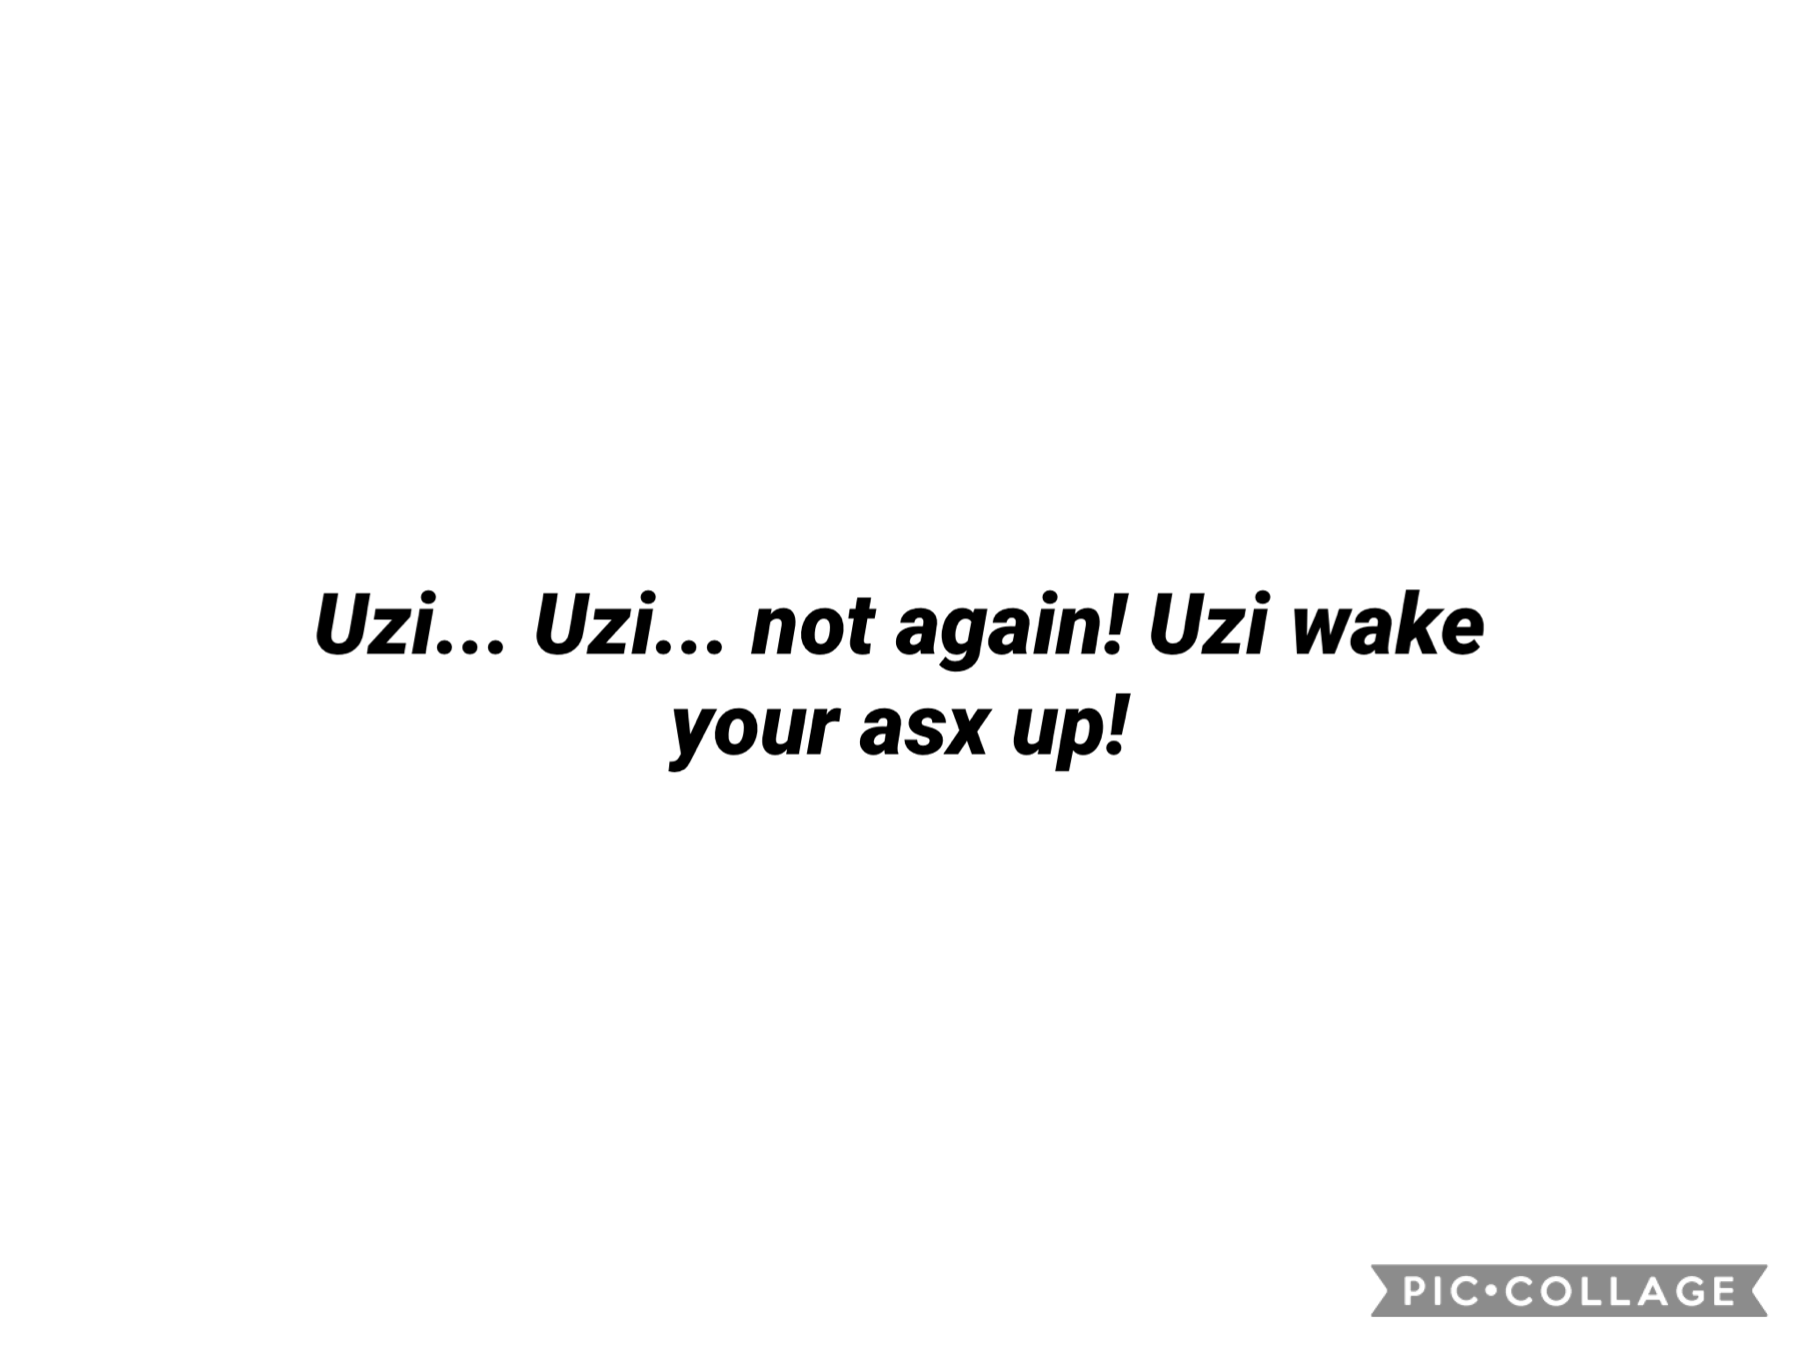 Uzi... Uzi... not again! Uzi wake your asx up!